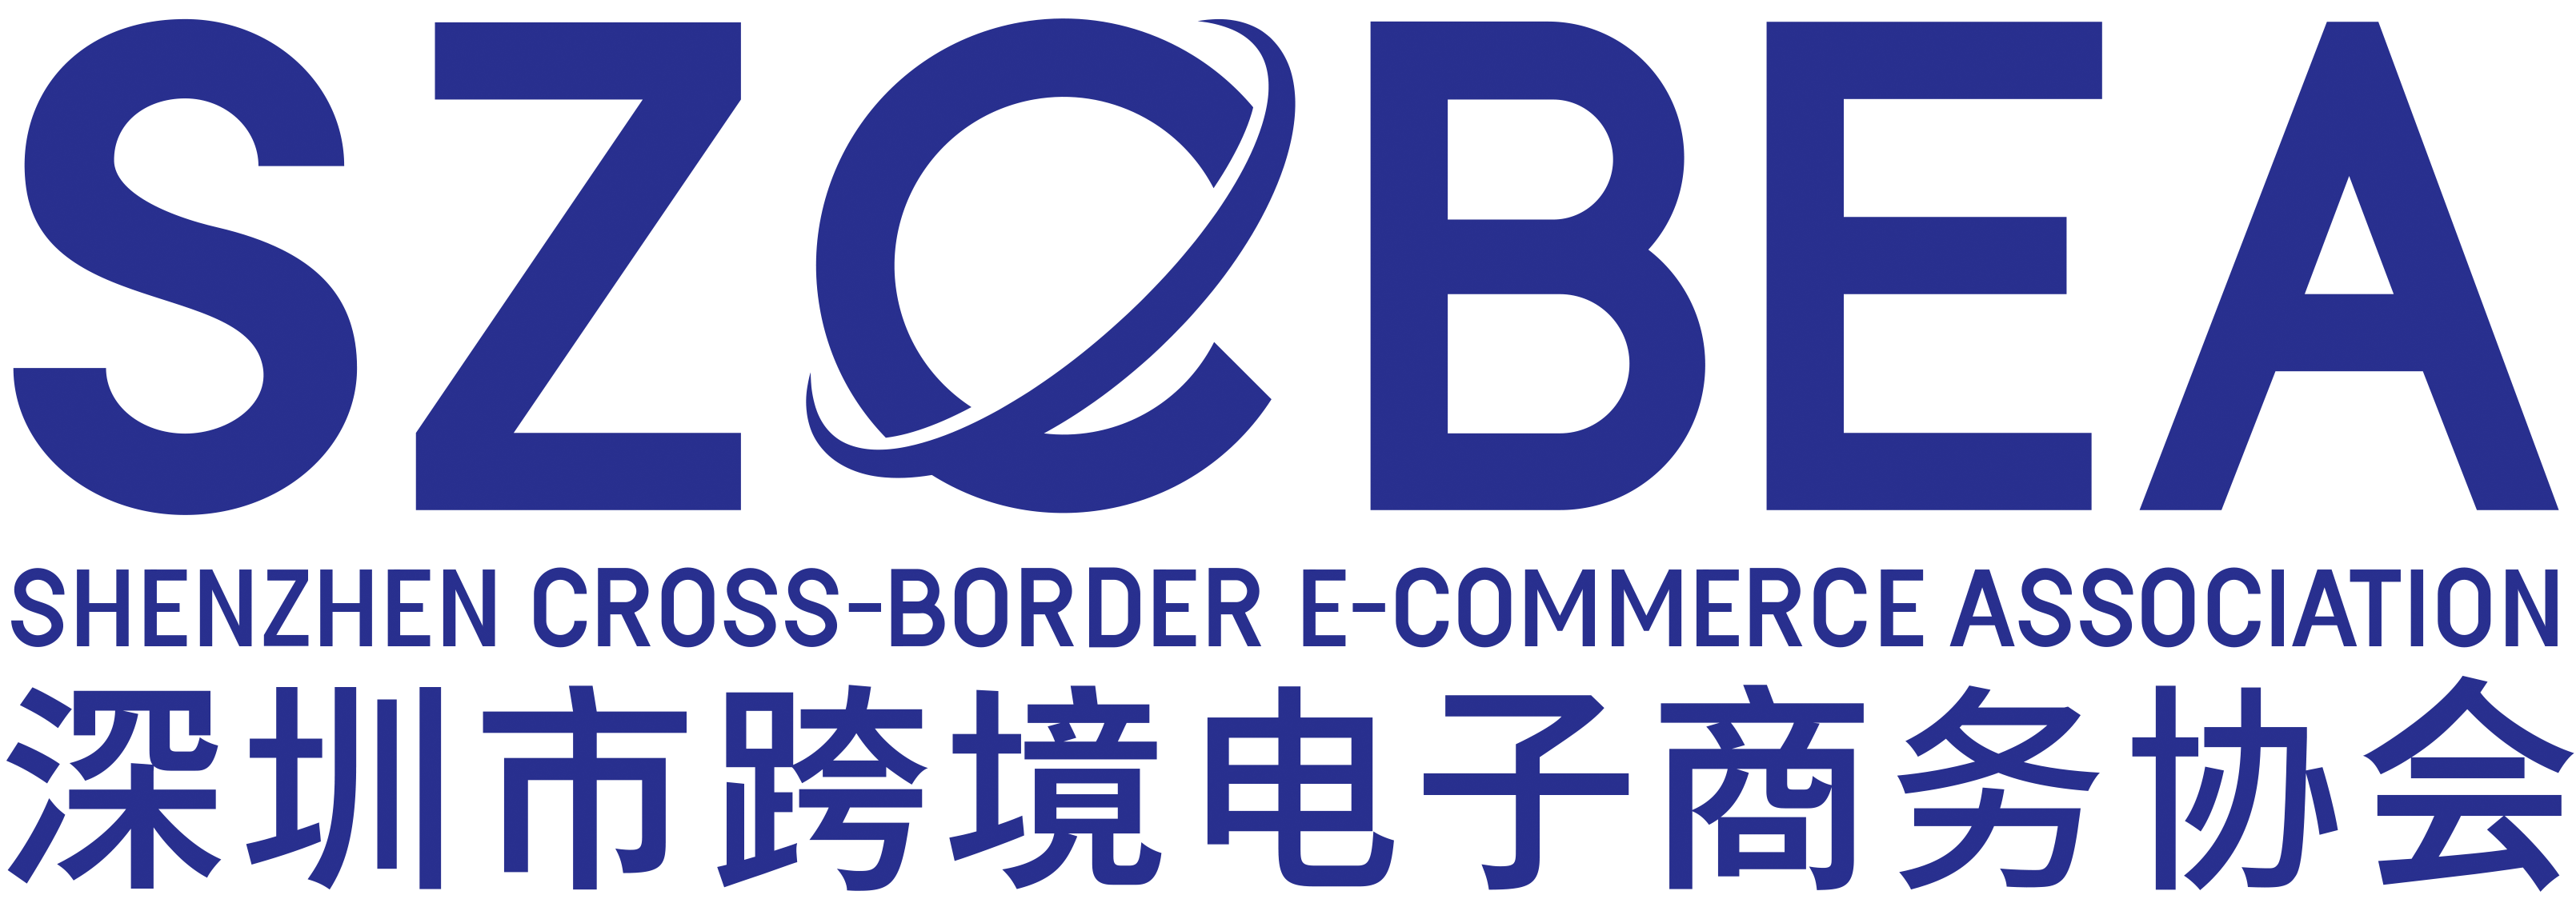 深跨协logo.png